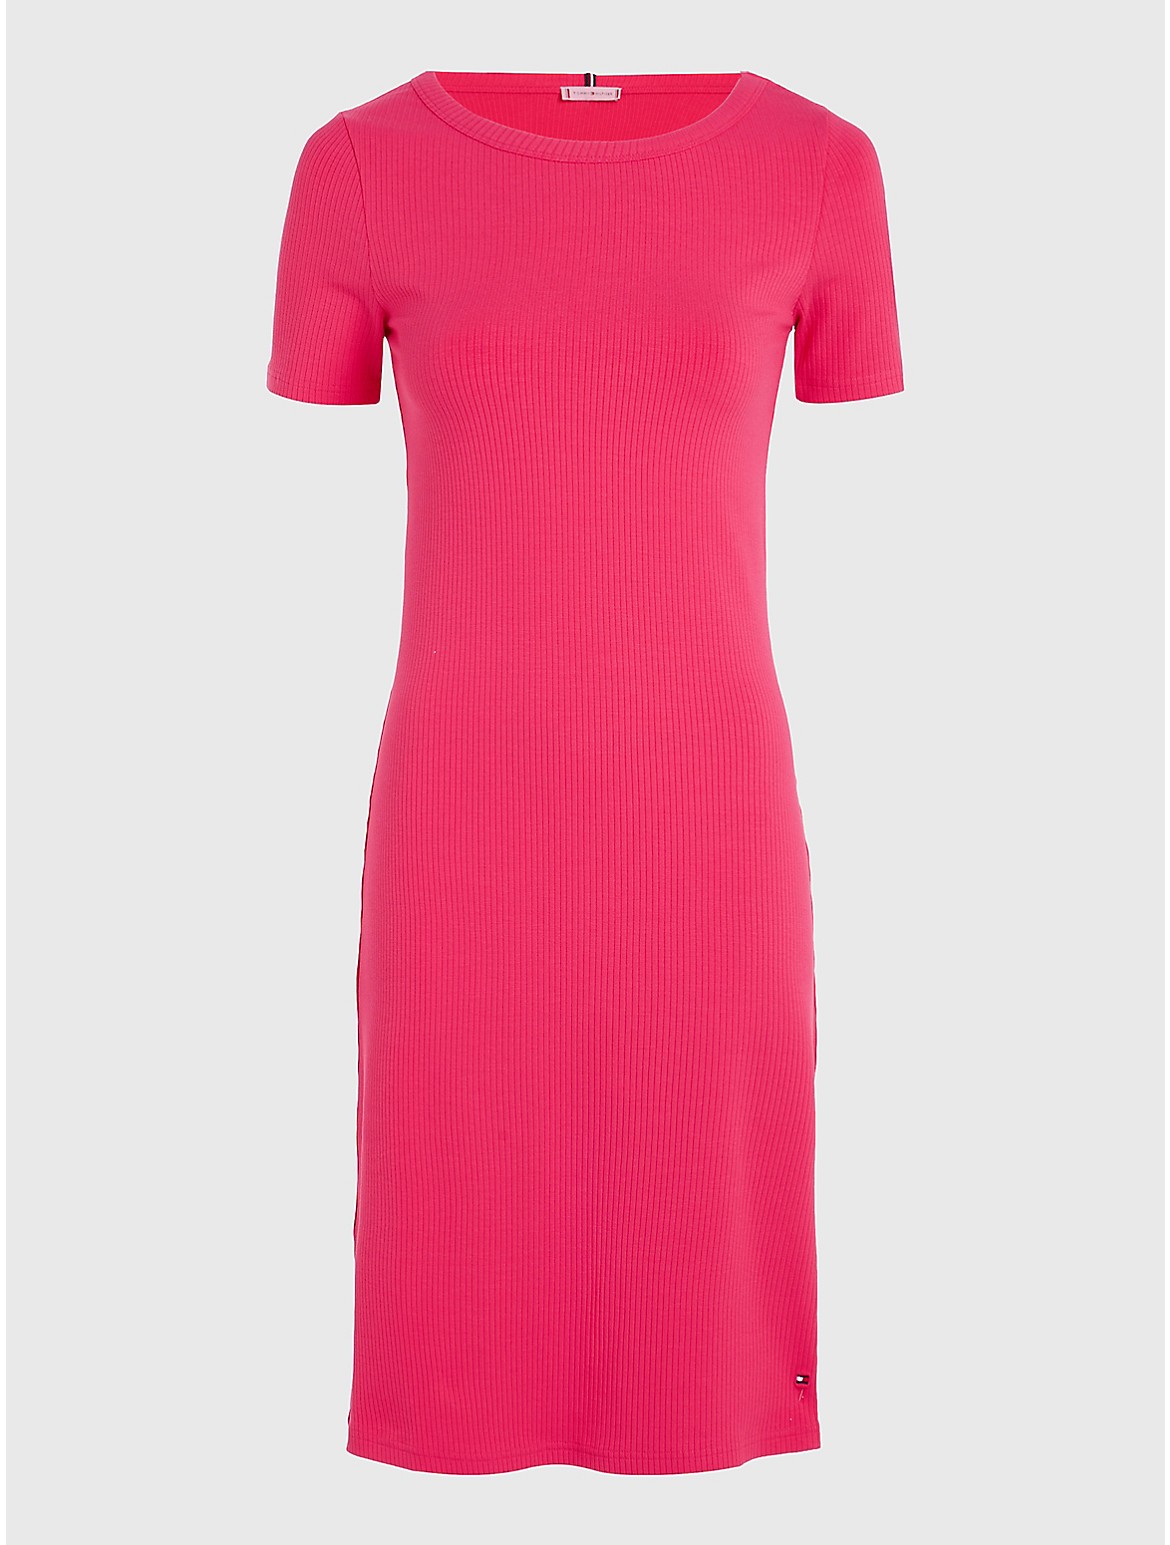 Tommy Hilfiger Women's Slim Fit Ribbed Short-Sleeve Dress - Pink - S